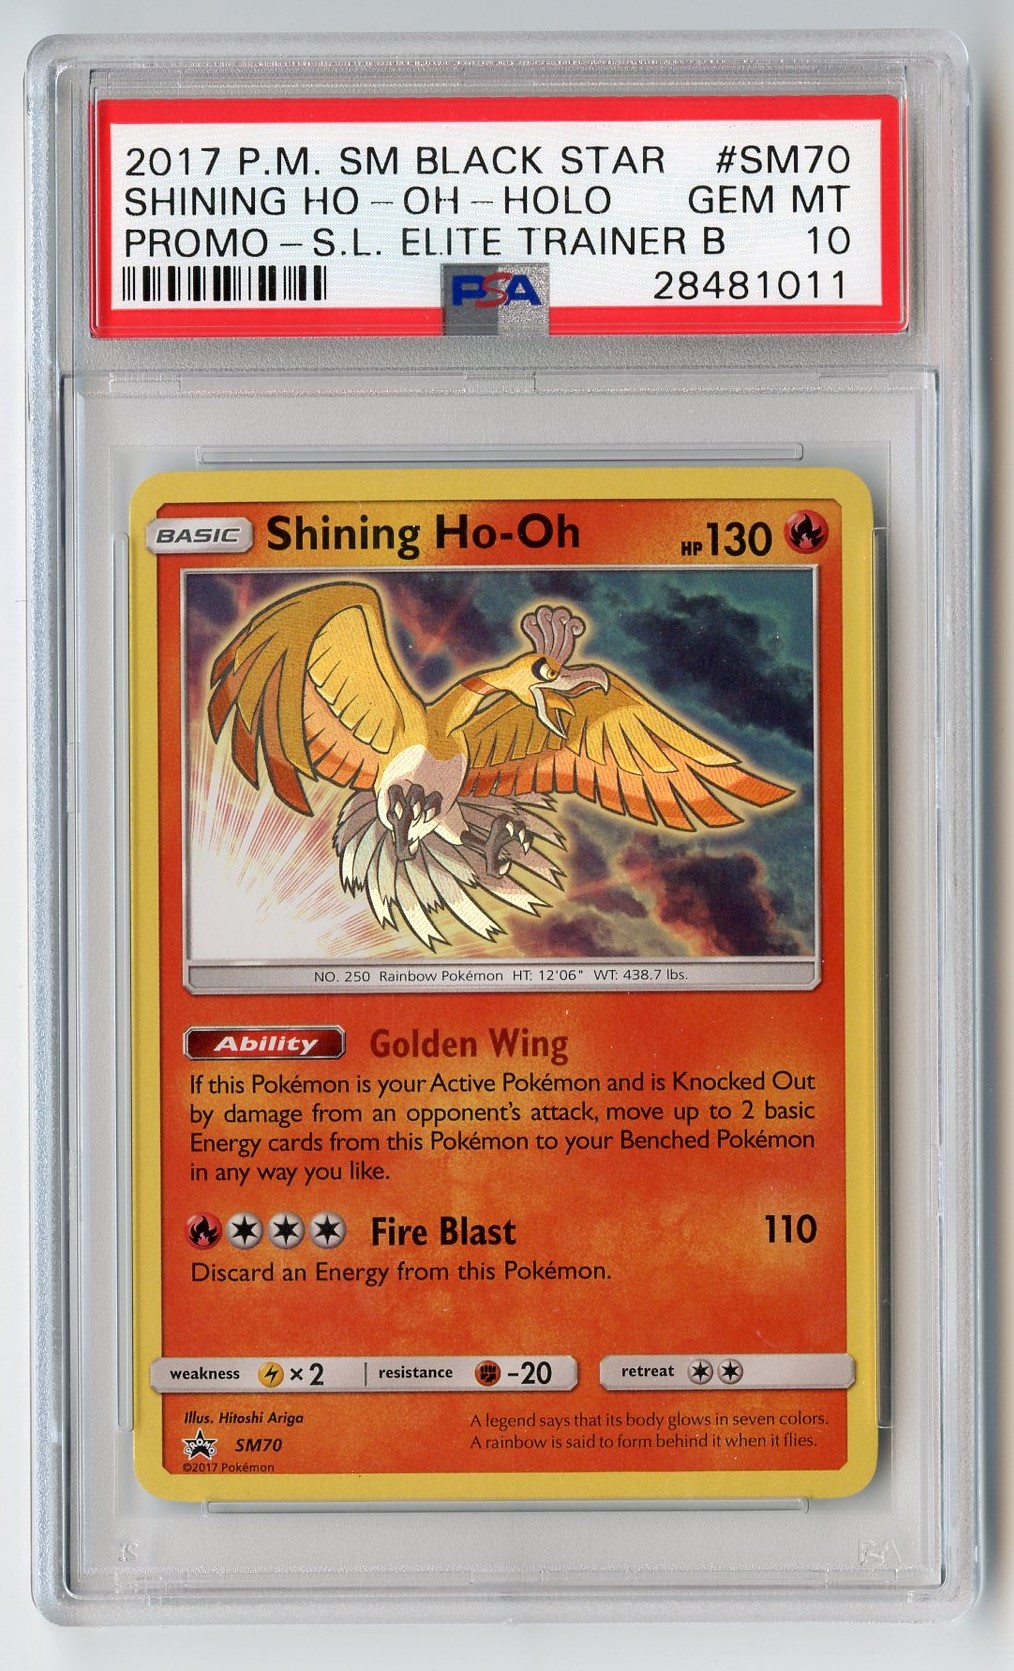 Shining Ho-Oh Promo Sm70 Pokemon Card